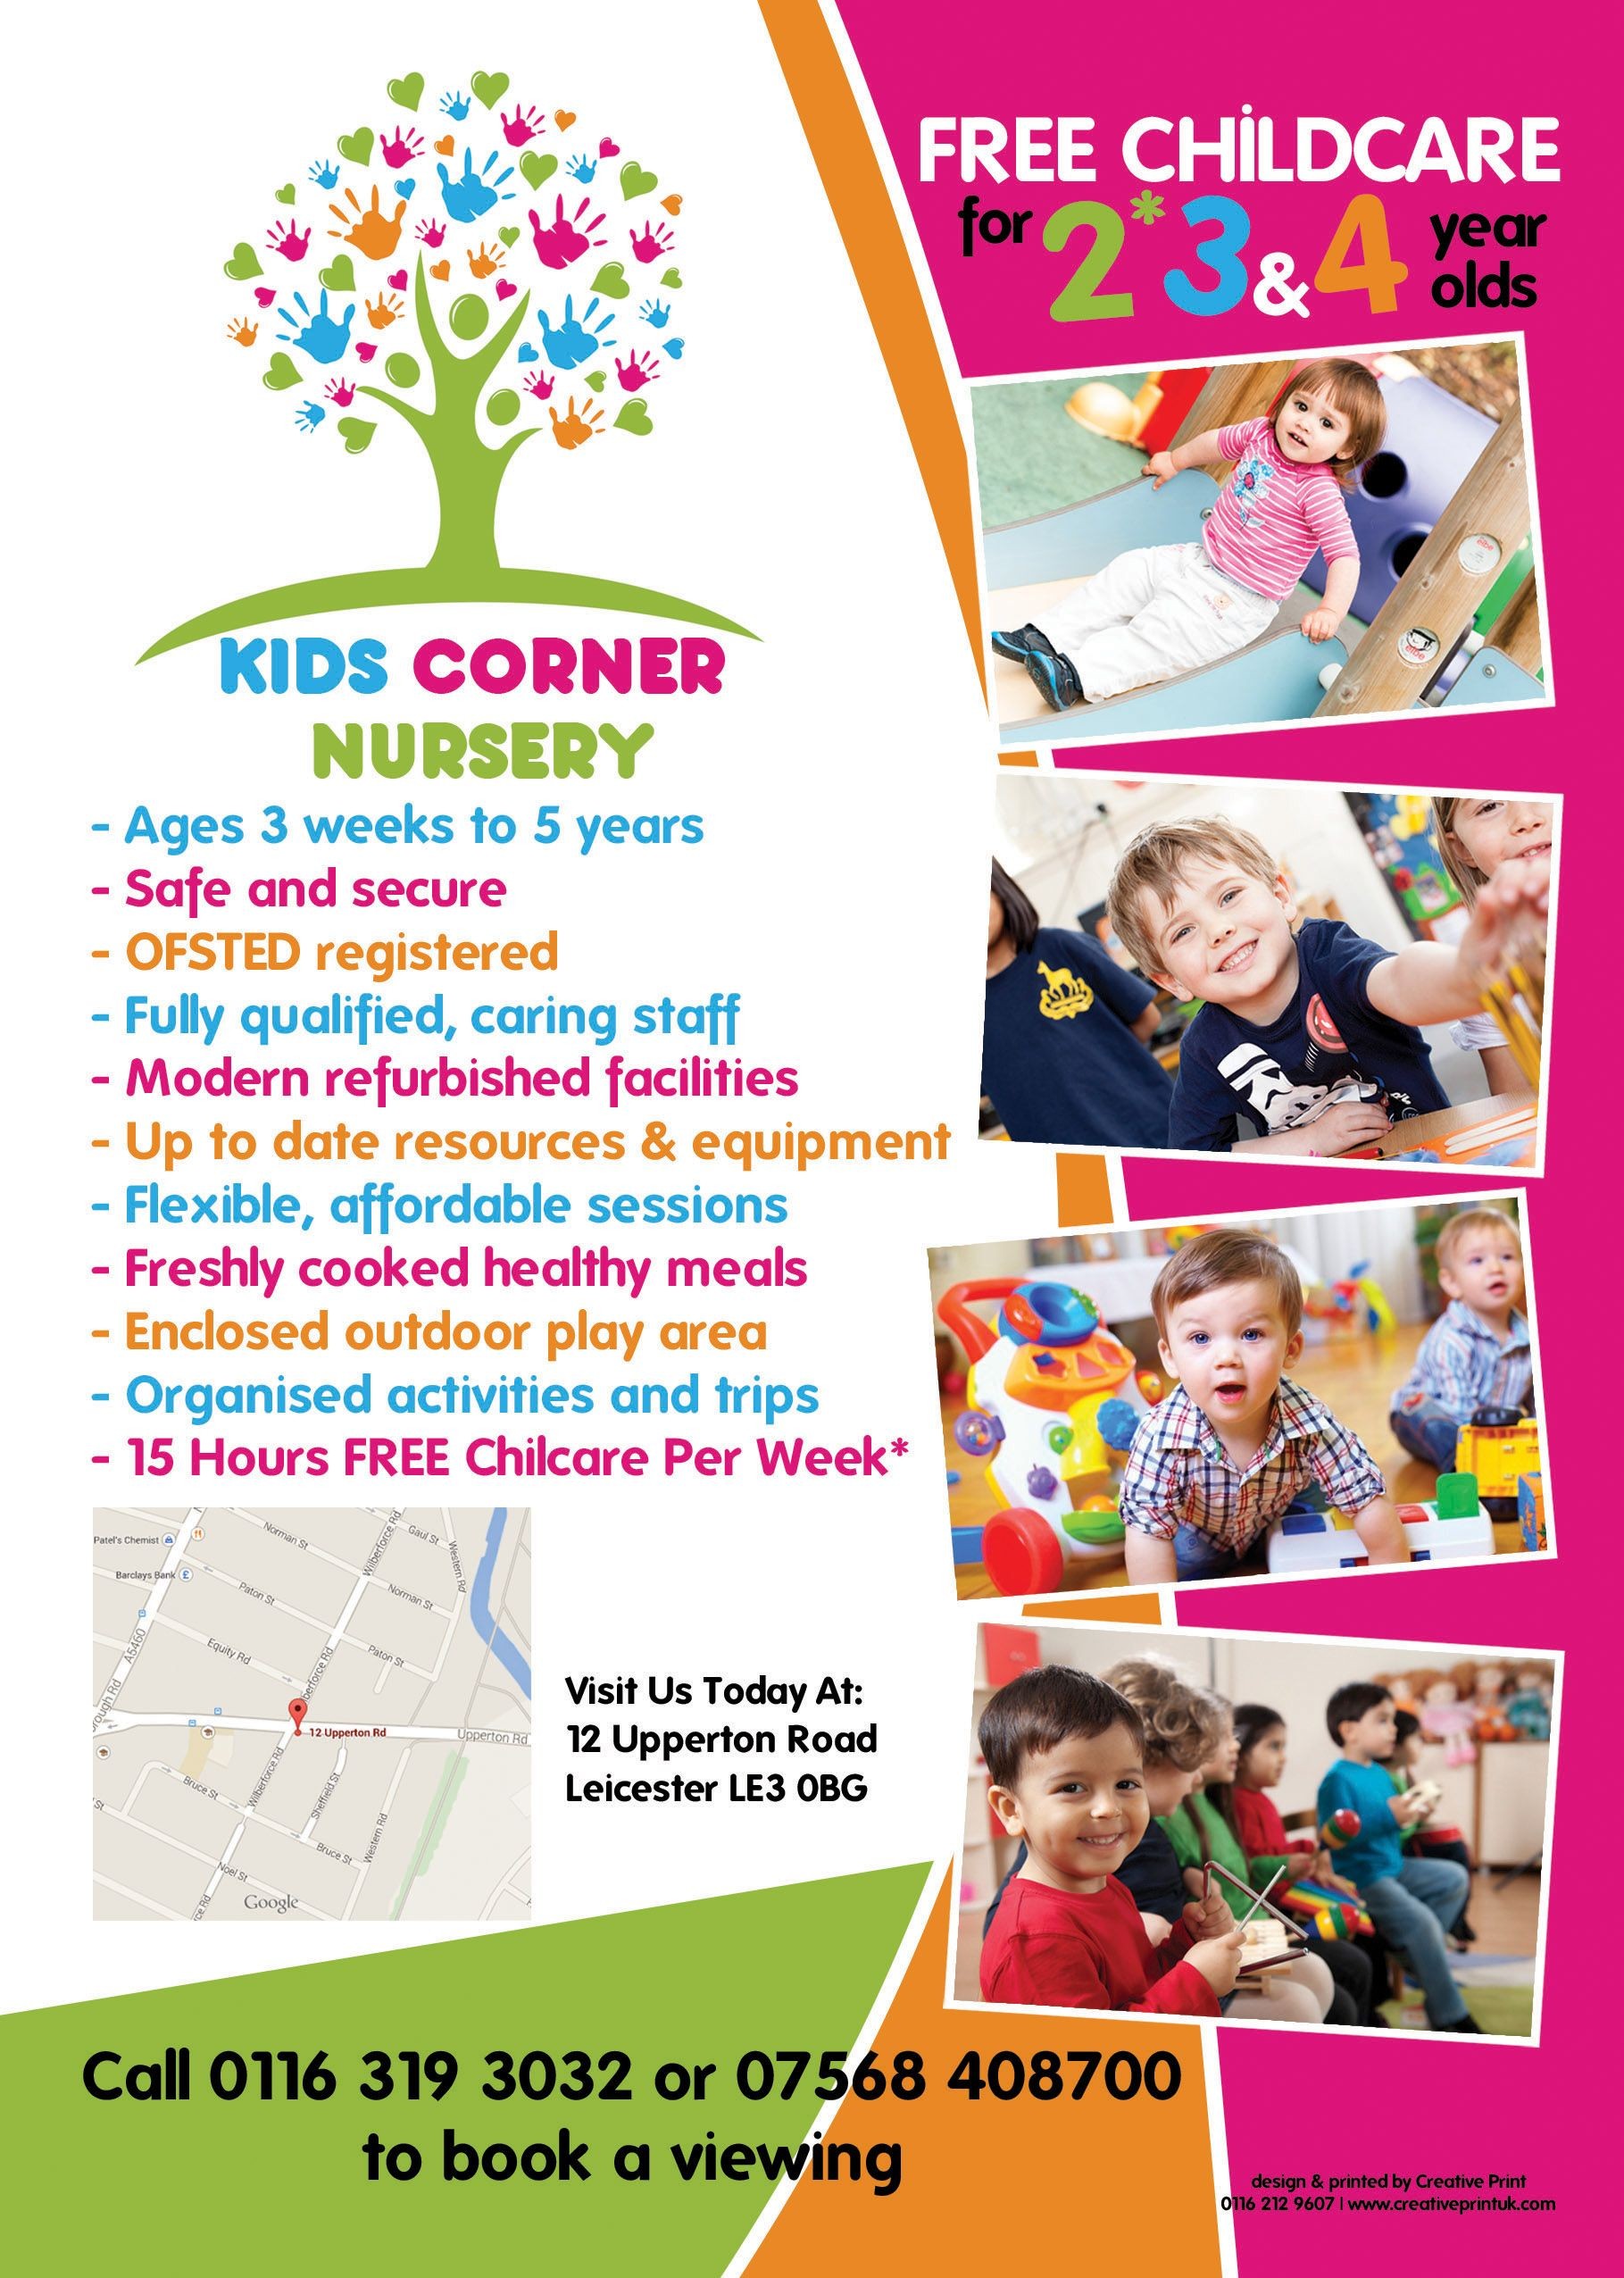 nursery flyer template
 The back of an A5 flyer designed for Kids Corner Nursery ..